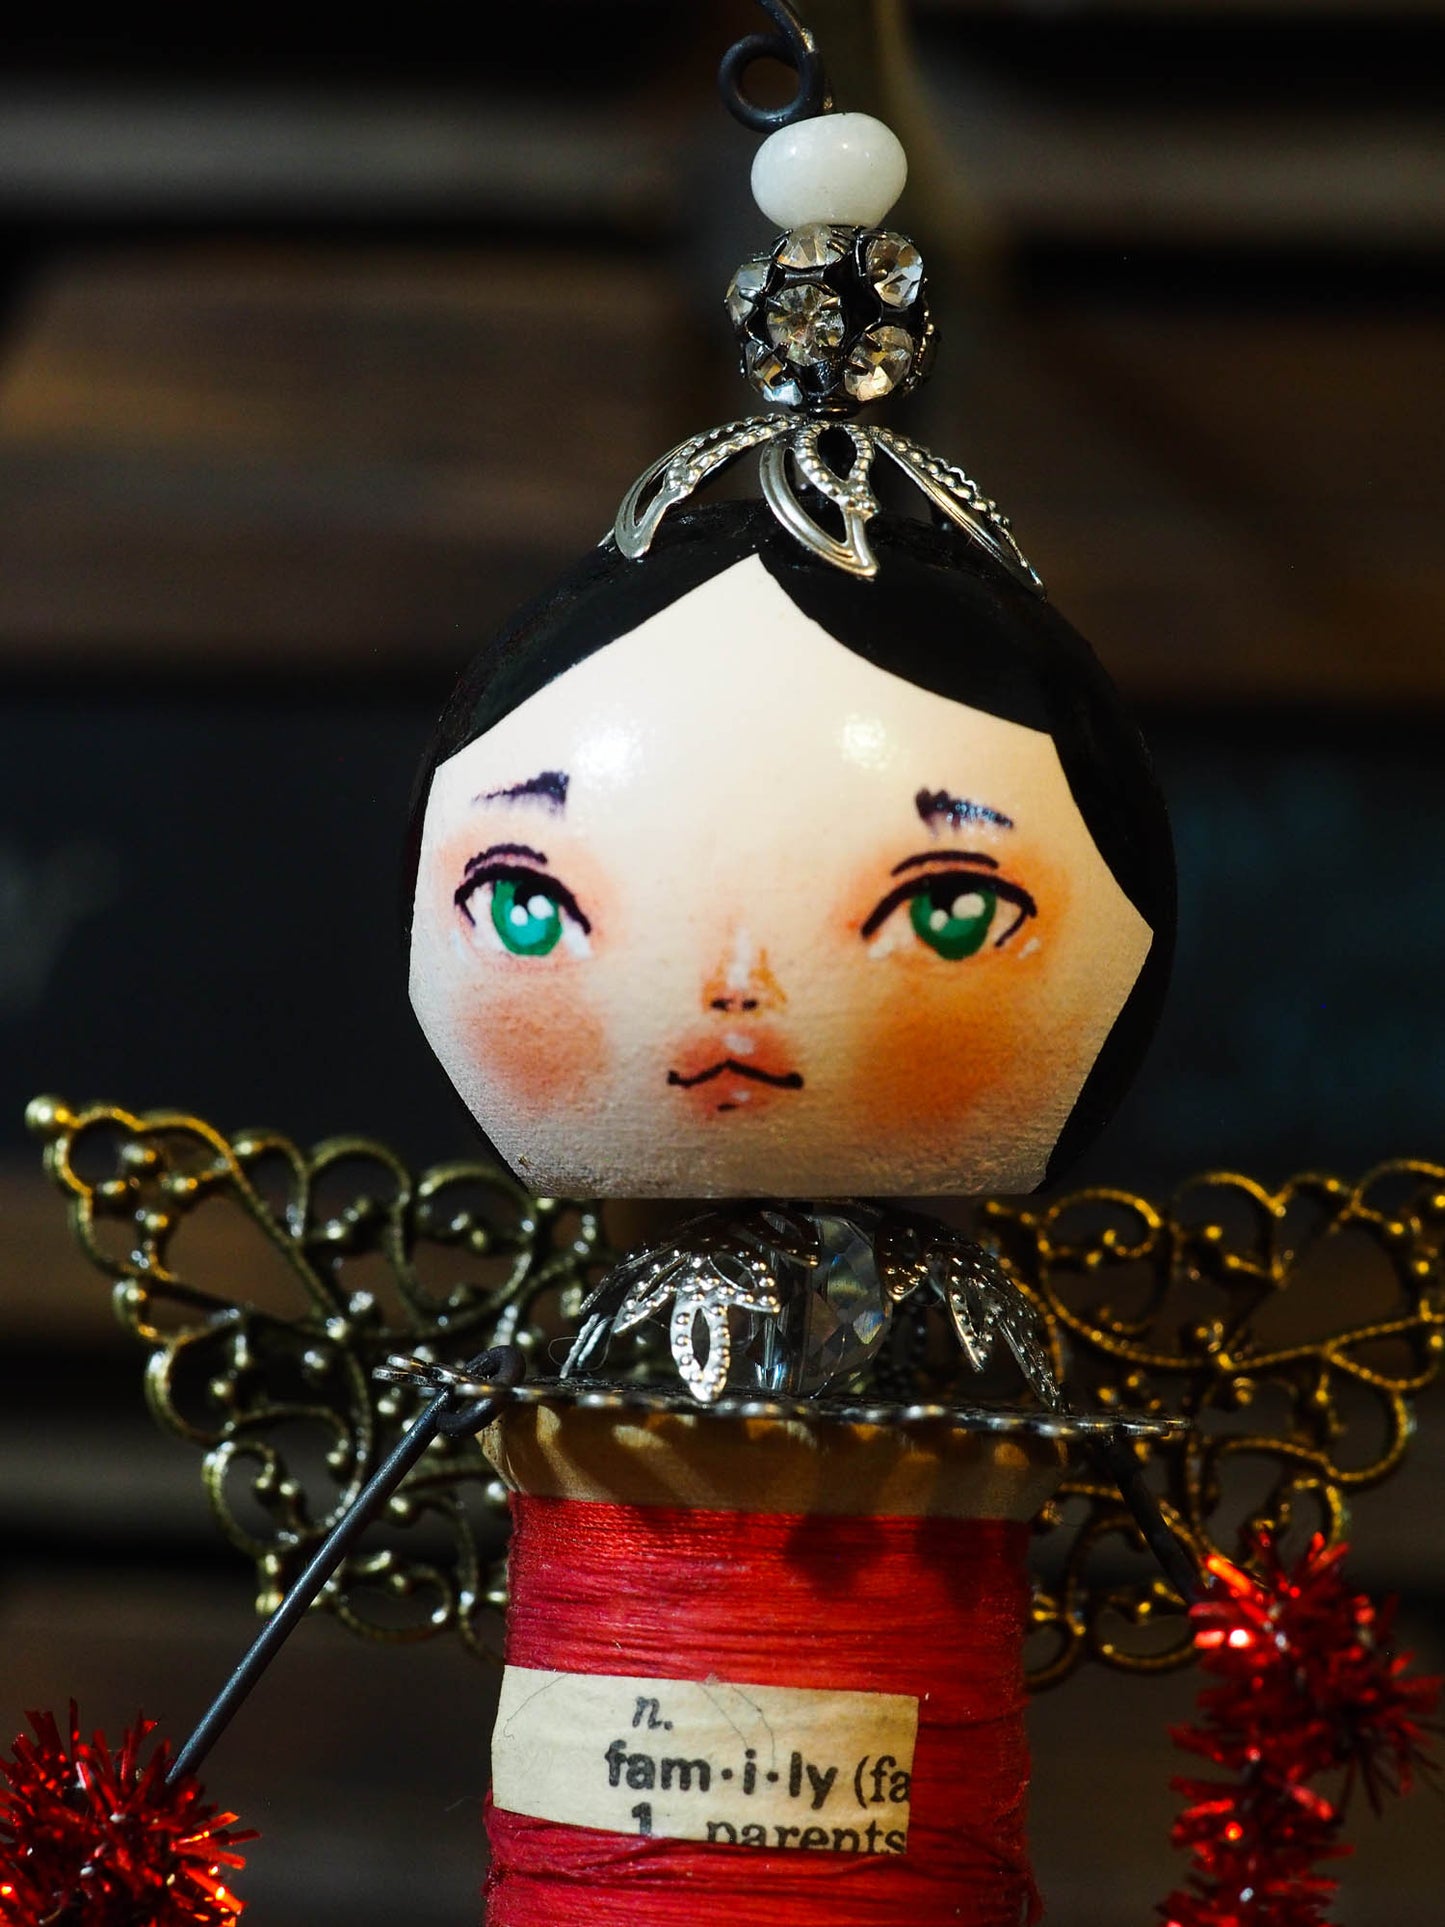 ANGEL No. 5 - An original handmade Christmas tree ornament by Danita, Original Art by Danita Art